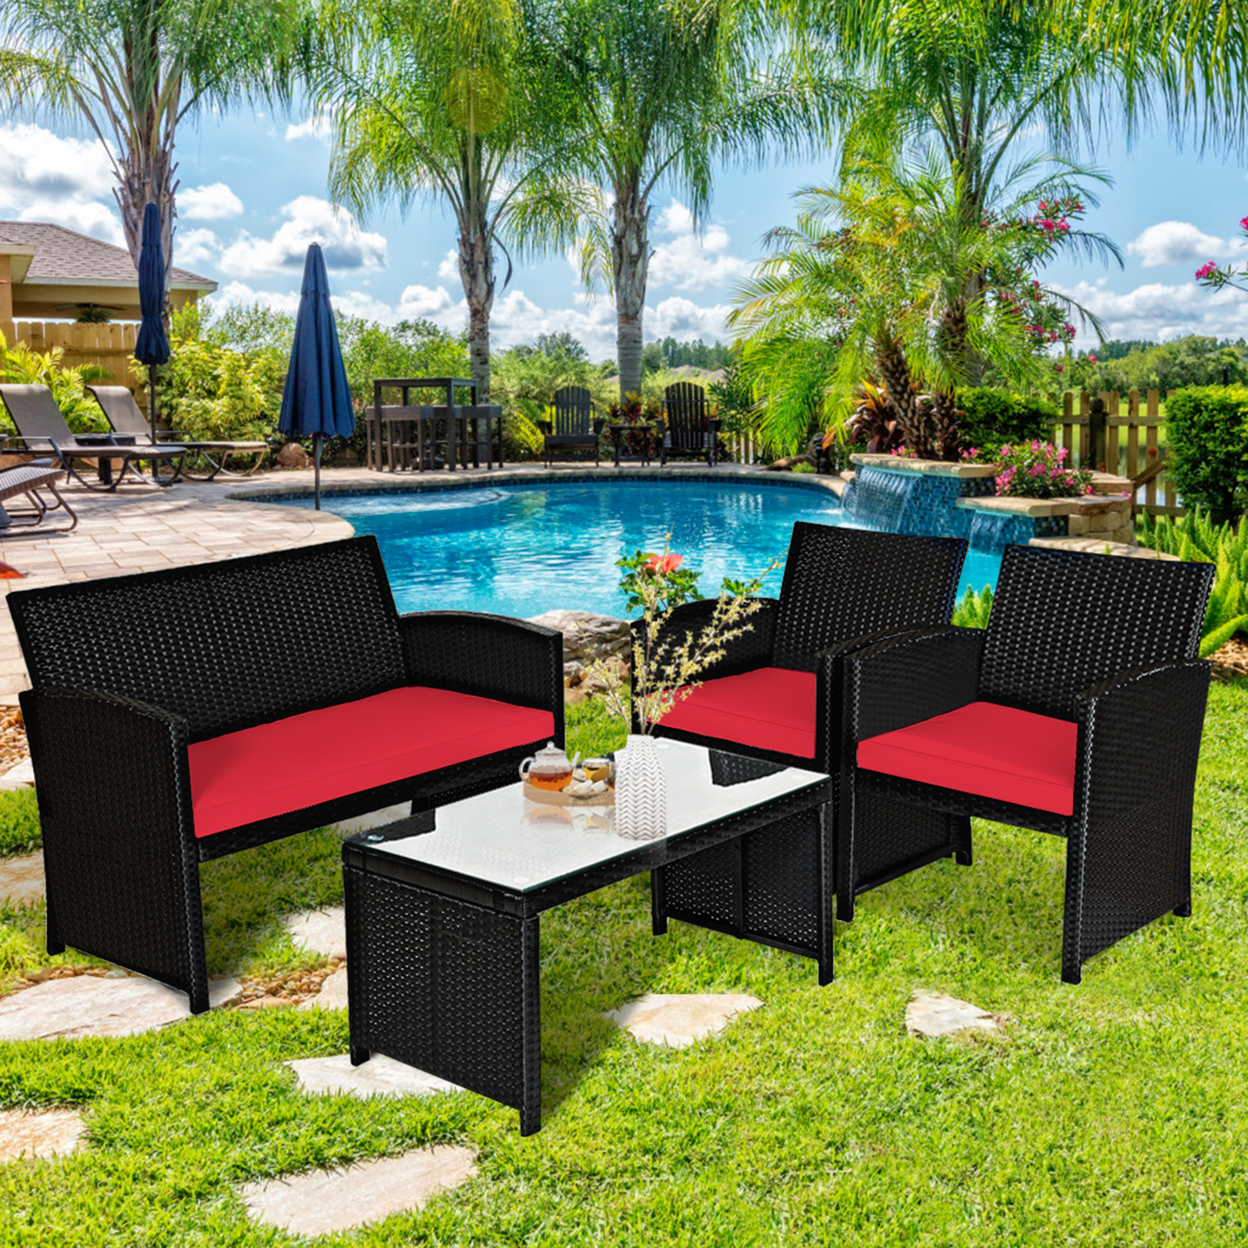 4PCS Rattan Outdoor Conversation Set Patio Furniture Set W/ Red Cushions